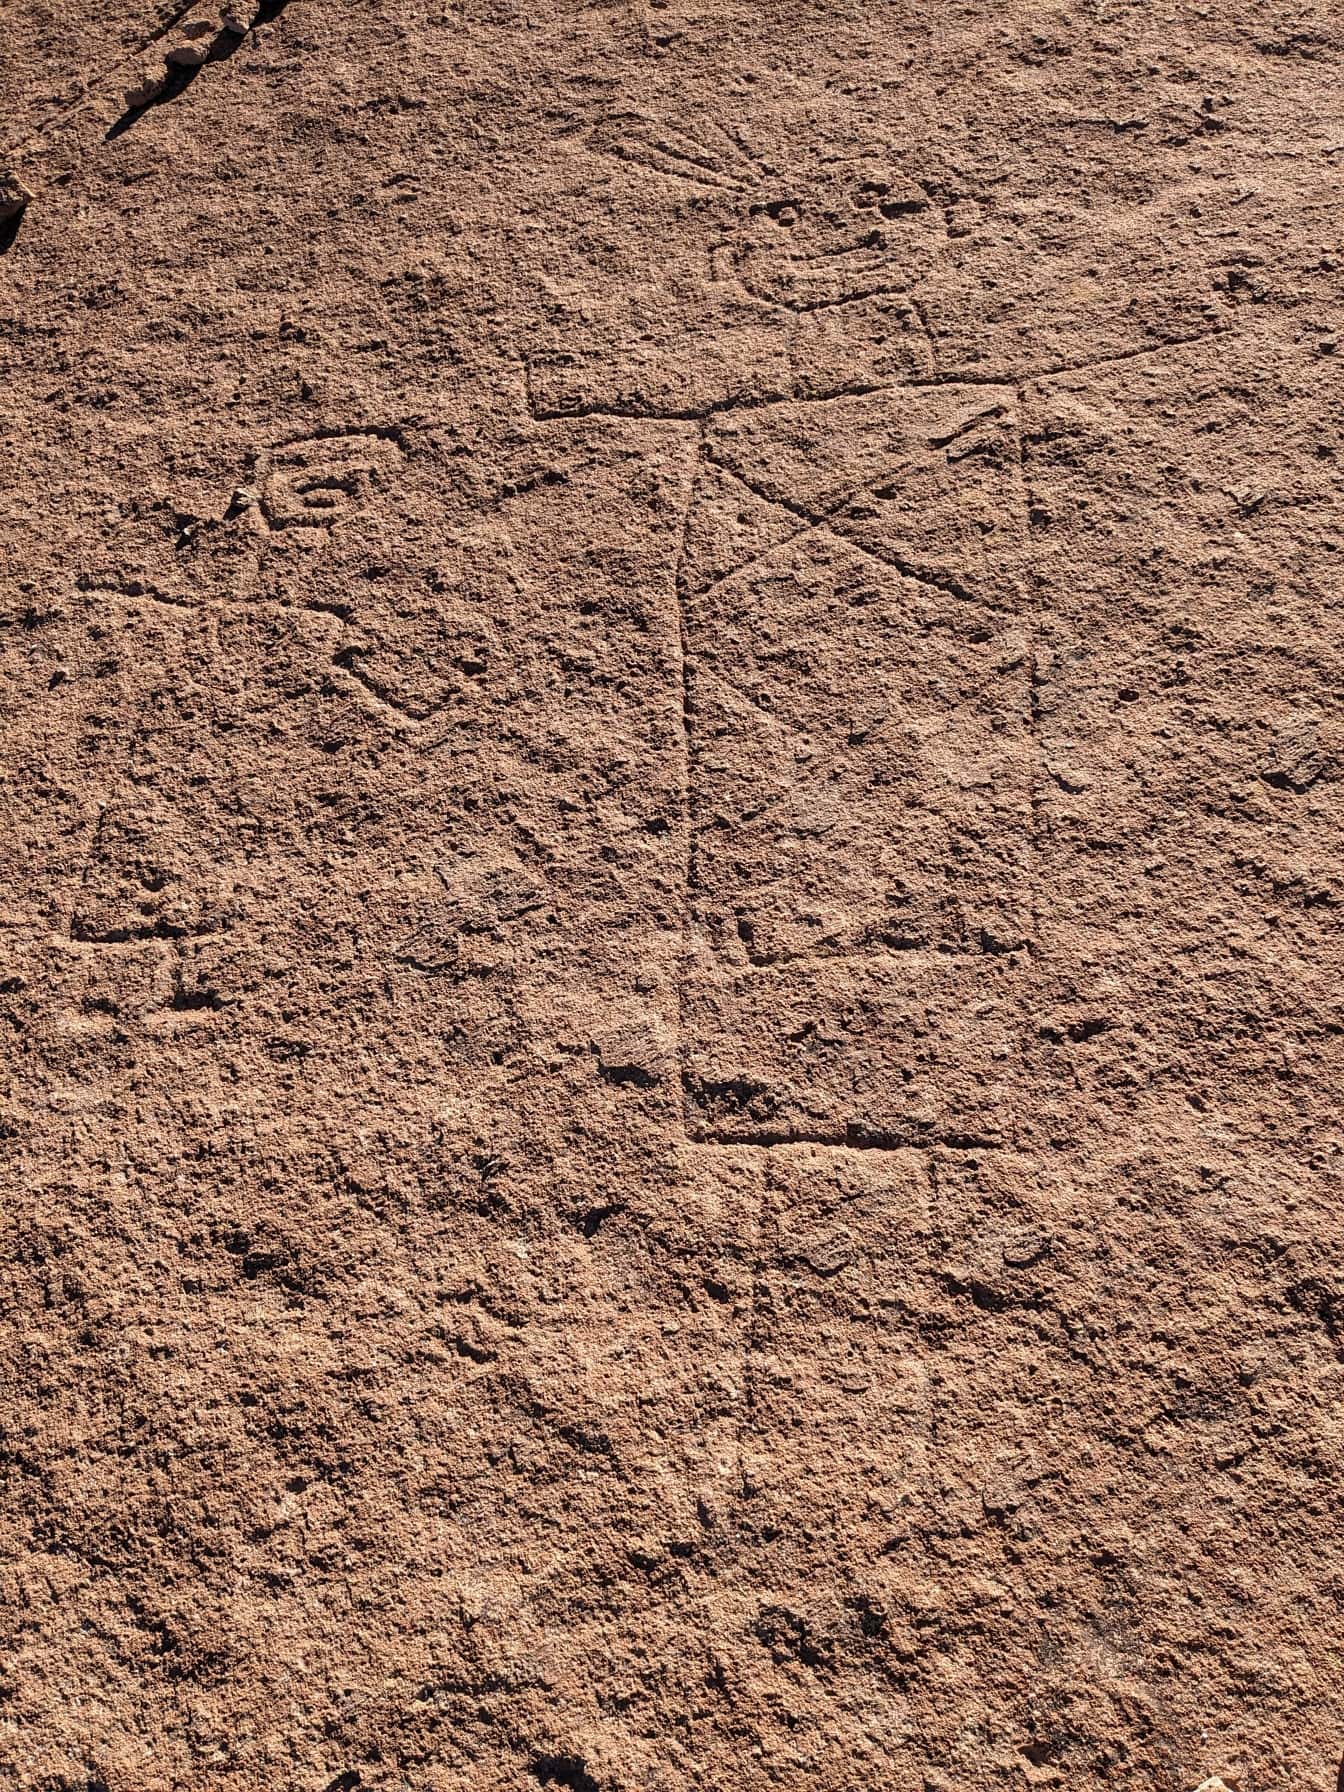 Starożytne naiwne ryty naskalne, petroglif podobny do linii z Nazca